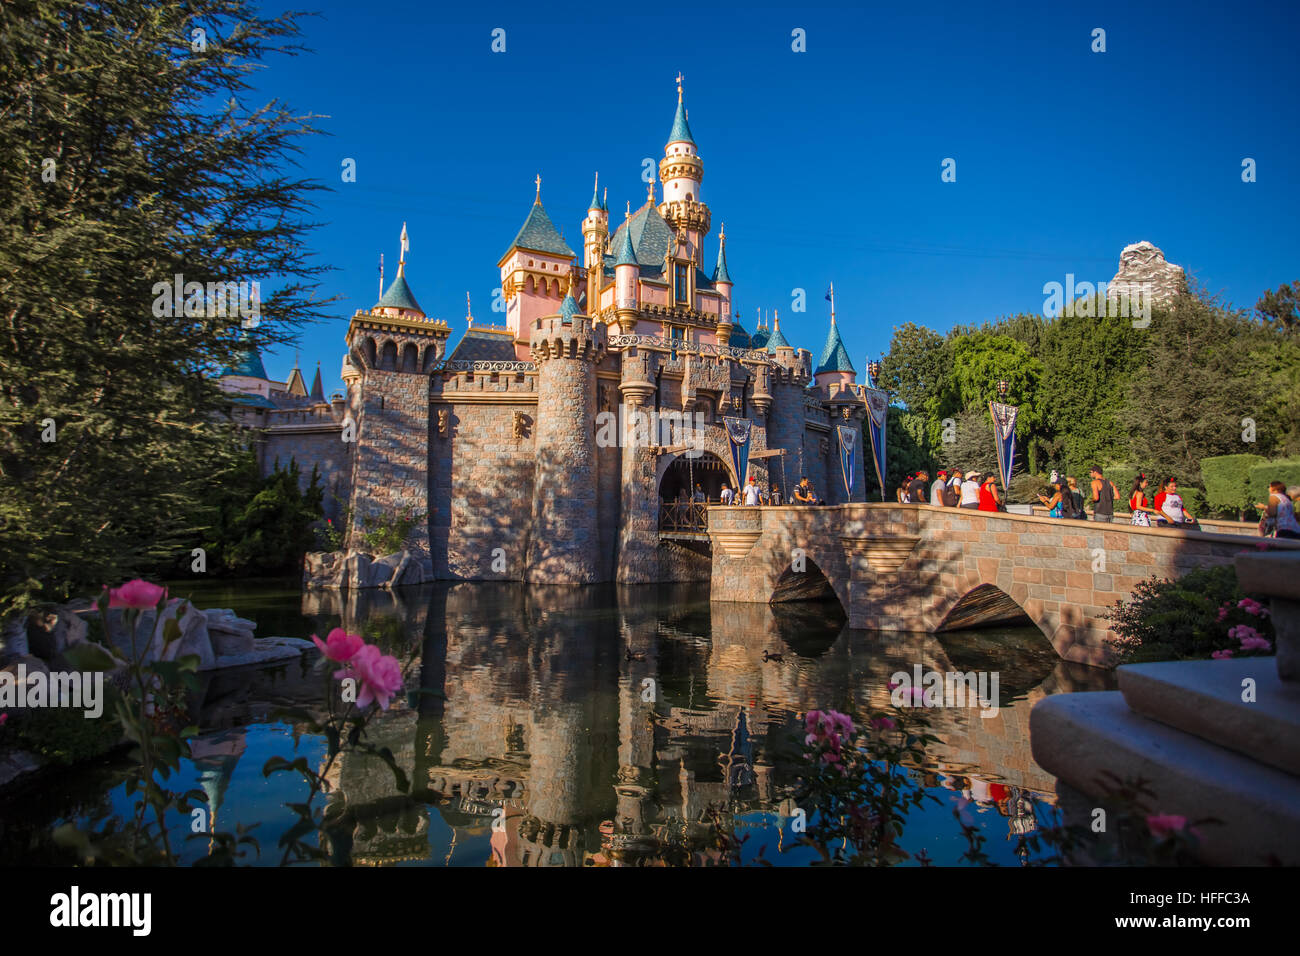 Disneyland 60th celebration, This year Disneyland celebrates its 60th aniversary of been open. Stock Photo